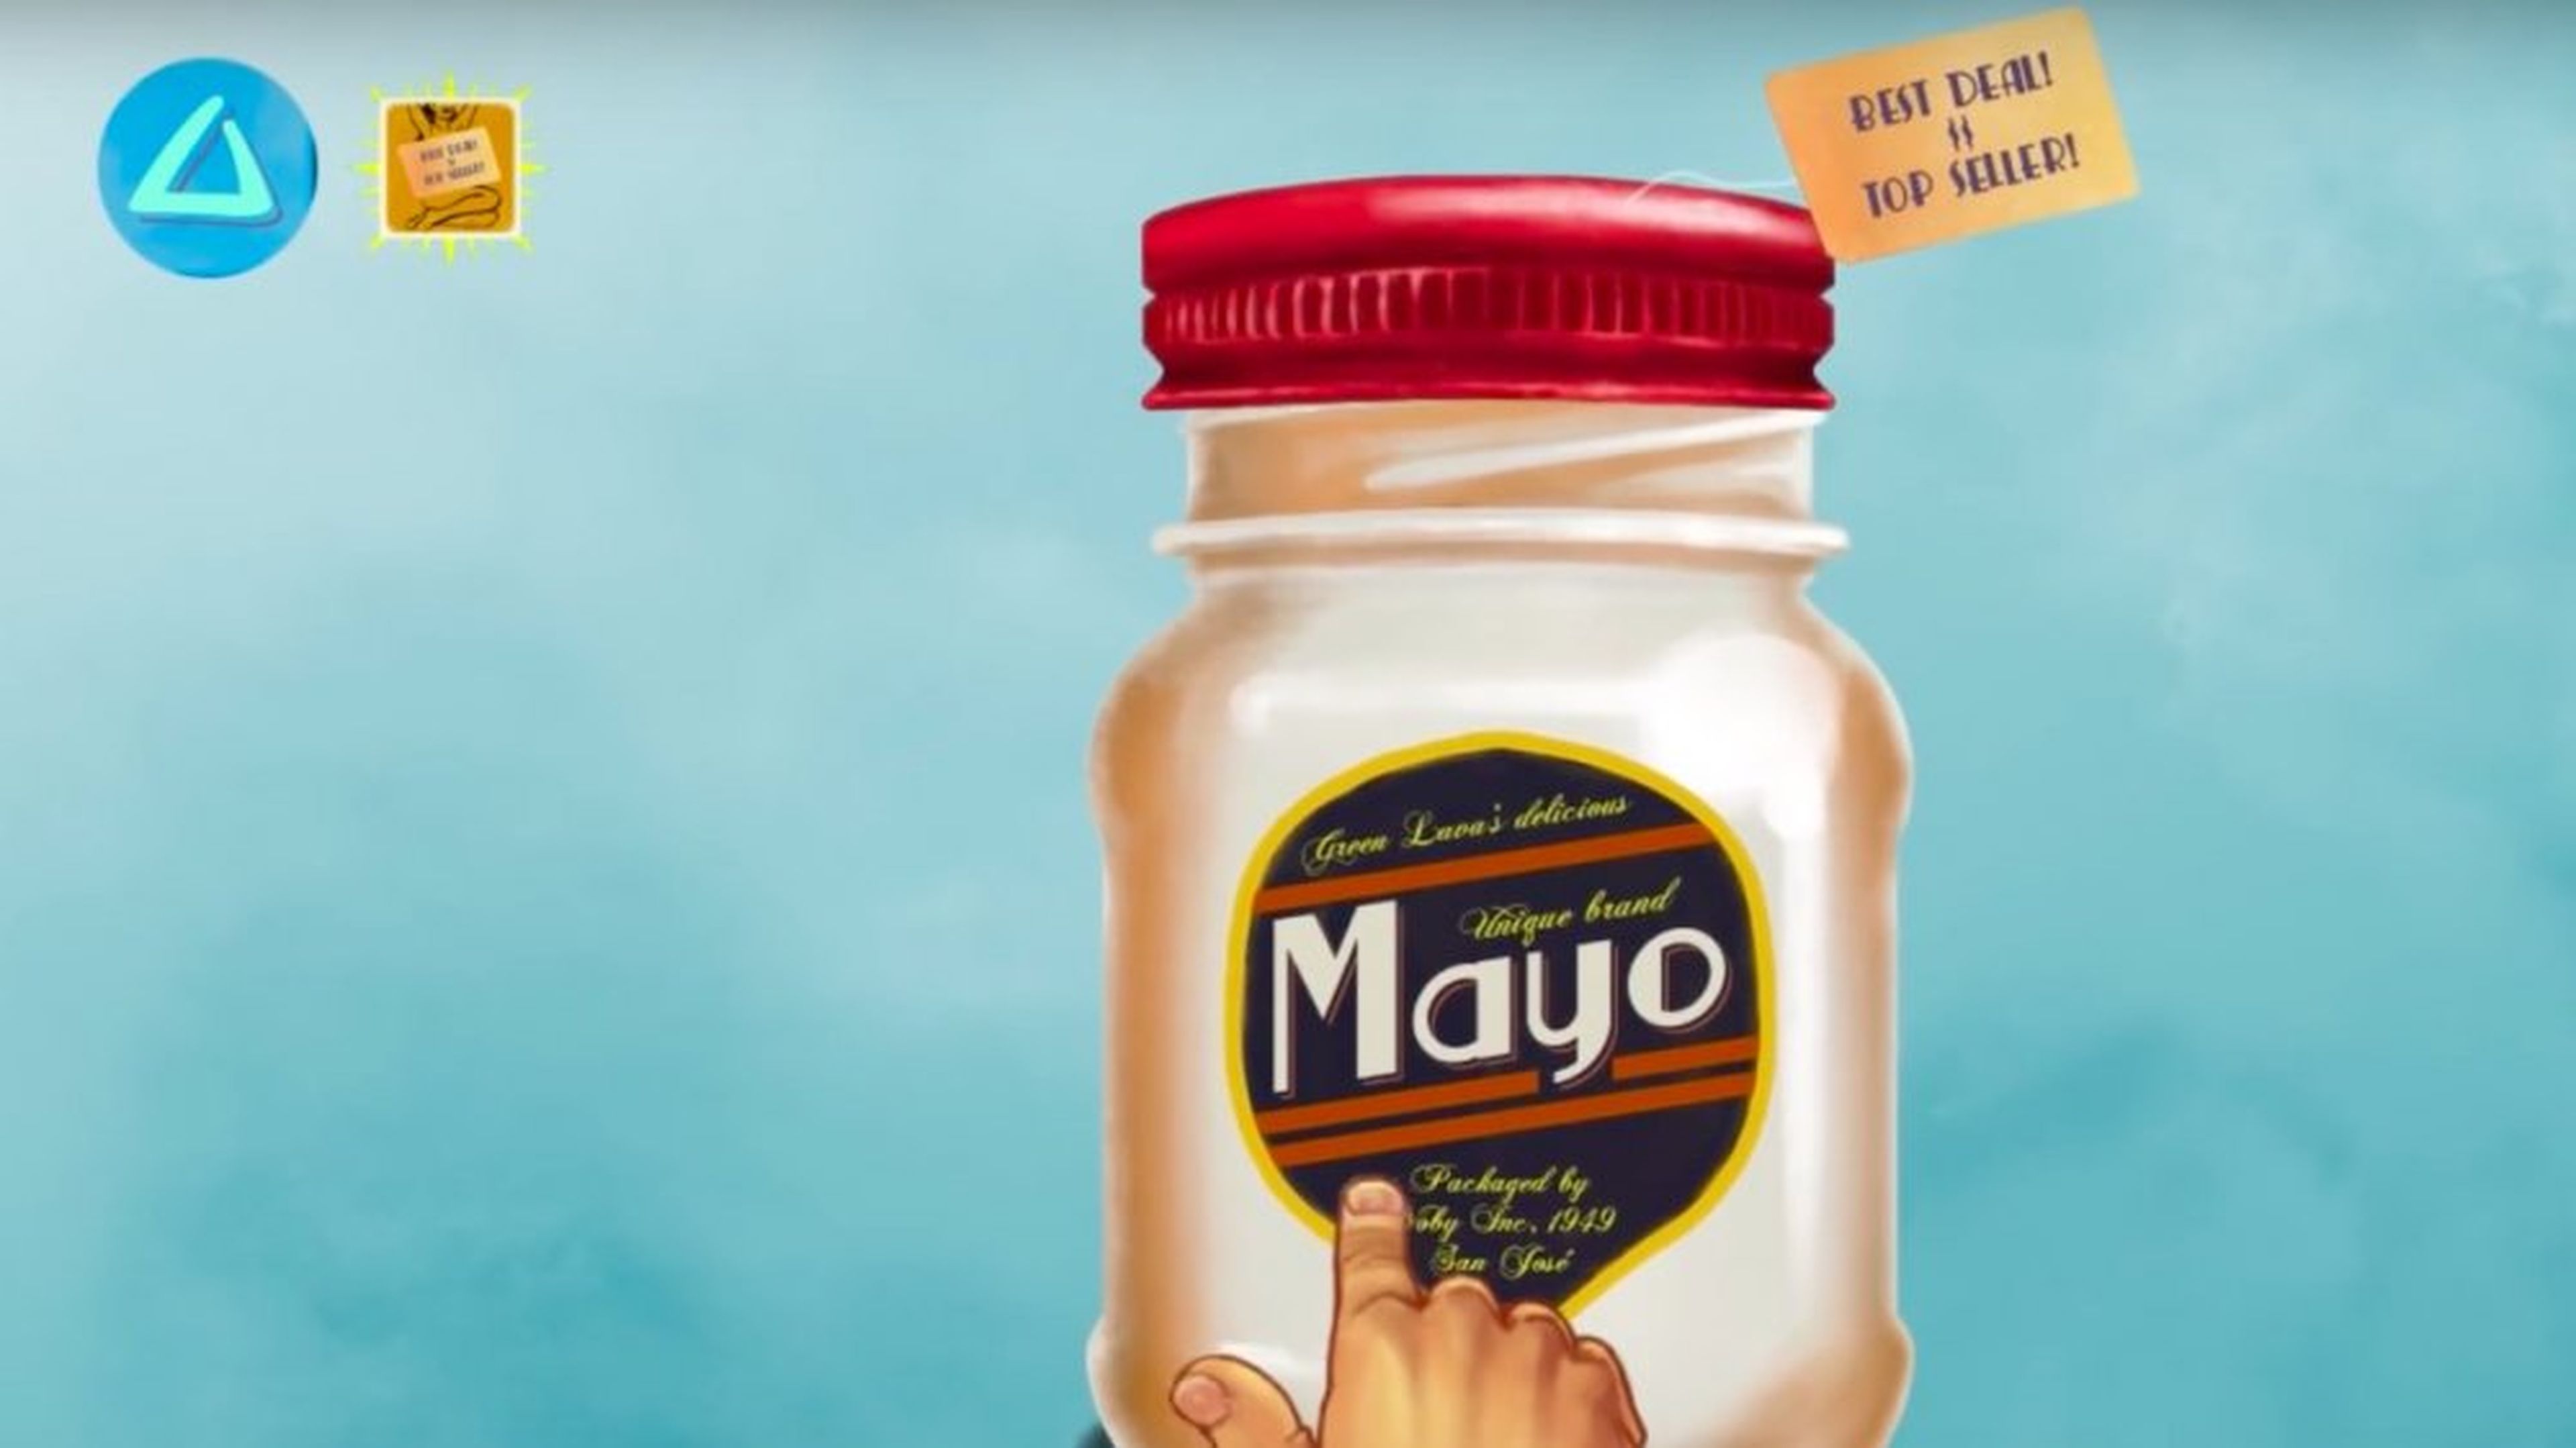 My name is Mayo